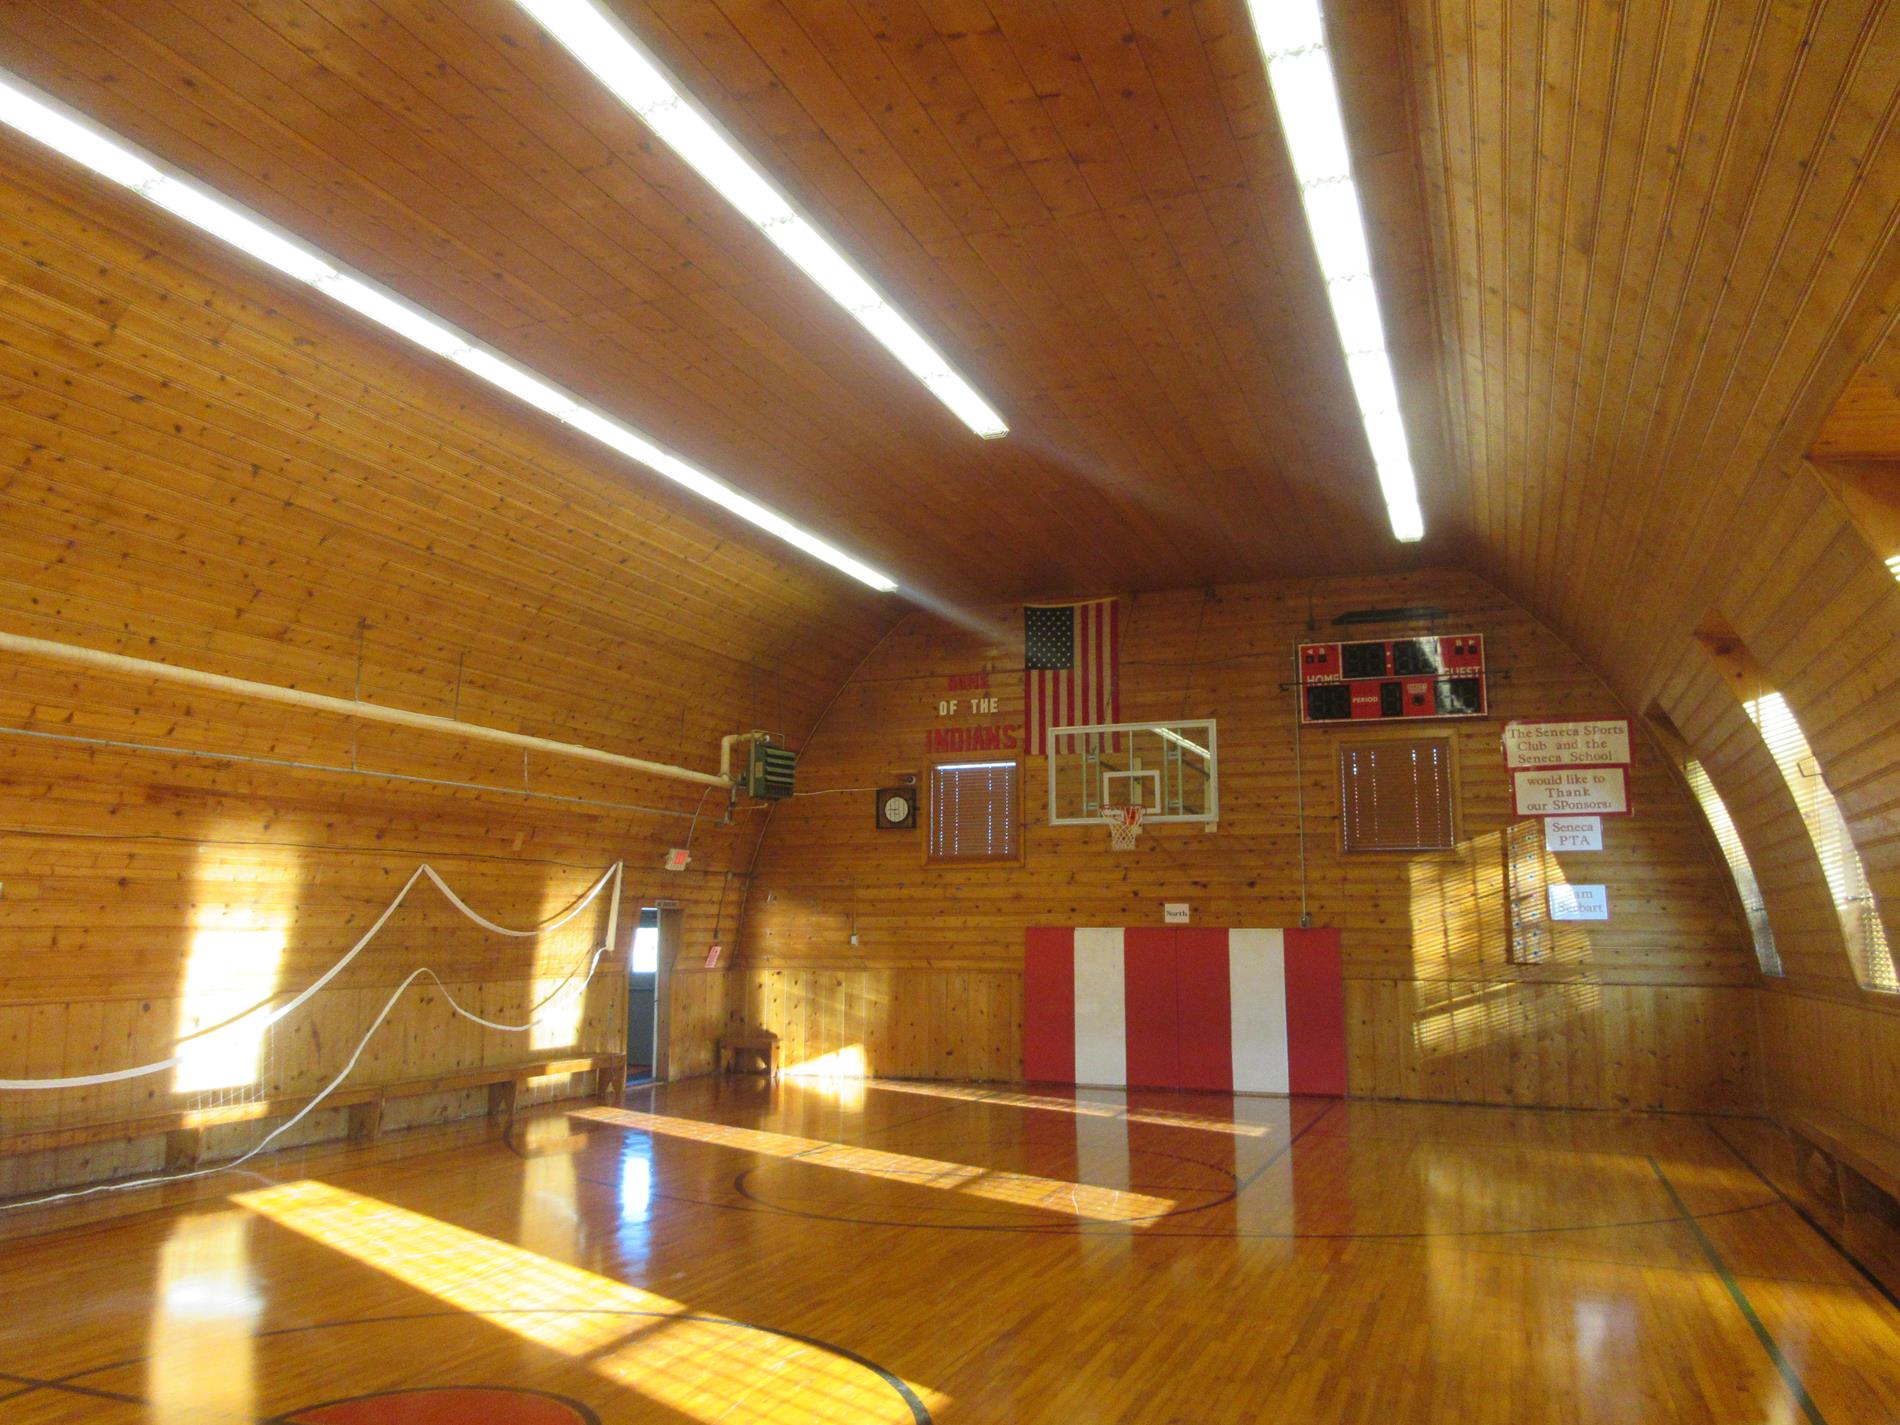 Seneca Elementary School - Gym